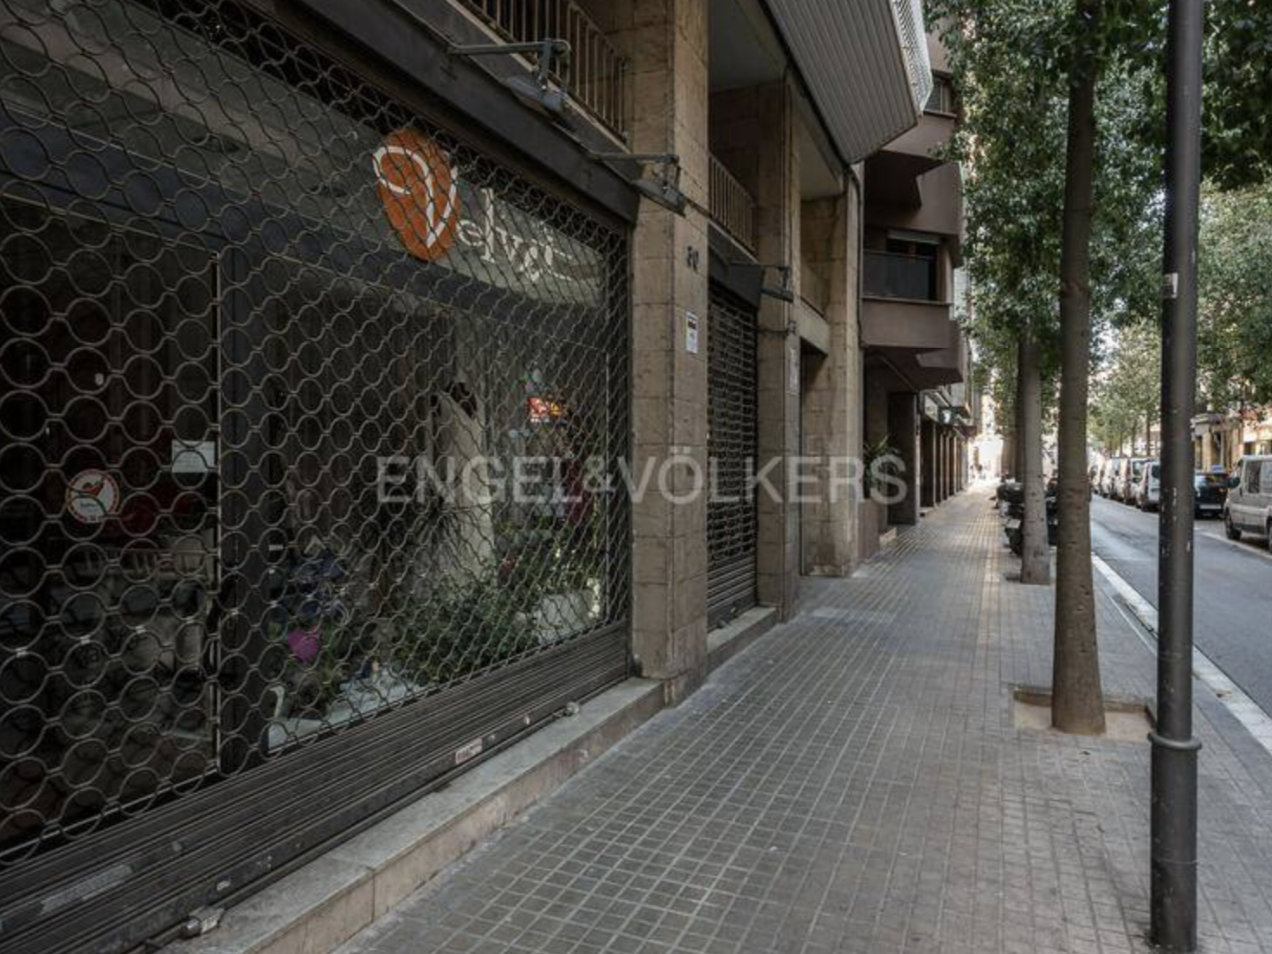 Inversión / Residencial inversión en Sabadell - IMG_7284.jpg